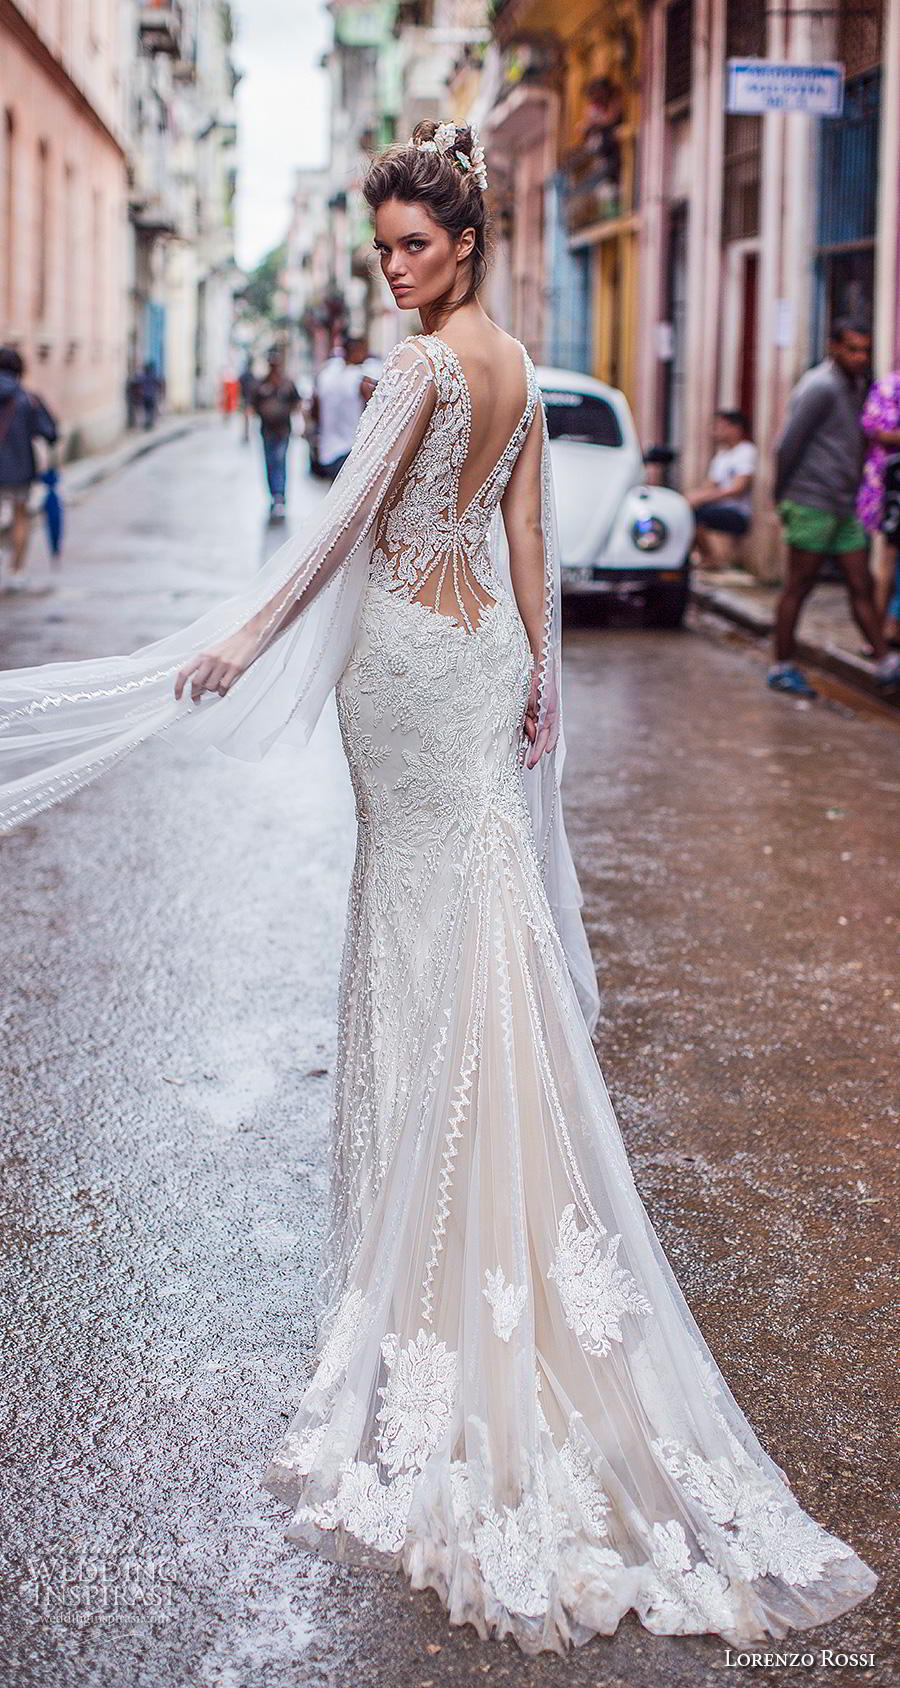 lorenzo rossi 2018 bridal sleeveless v neck full embellishment elegant fit and flare wedding dress v back short train (17) bv